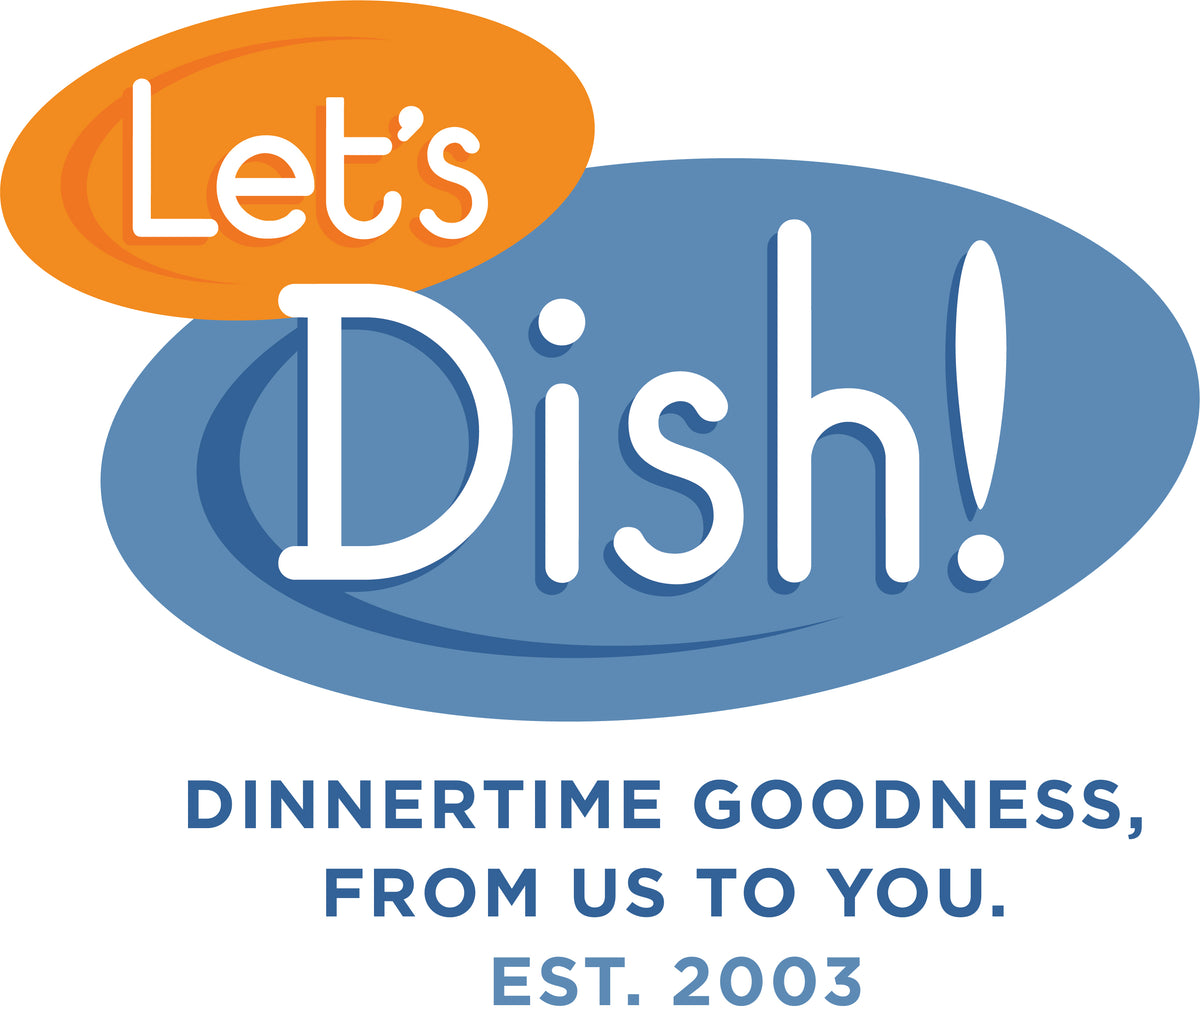 It s a dish. Dishes logo. Crockery logo.